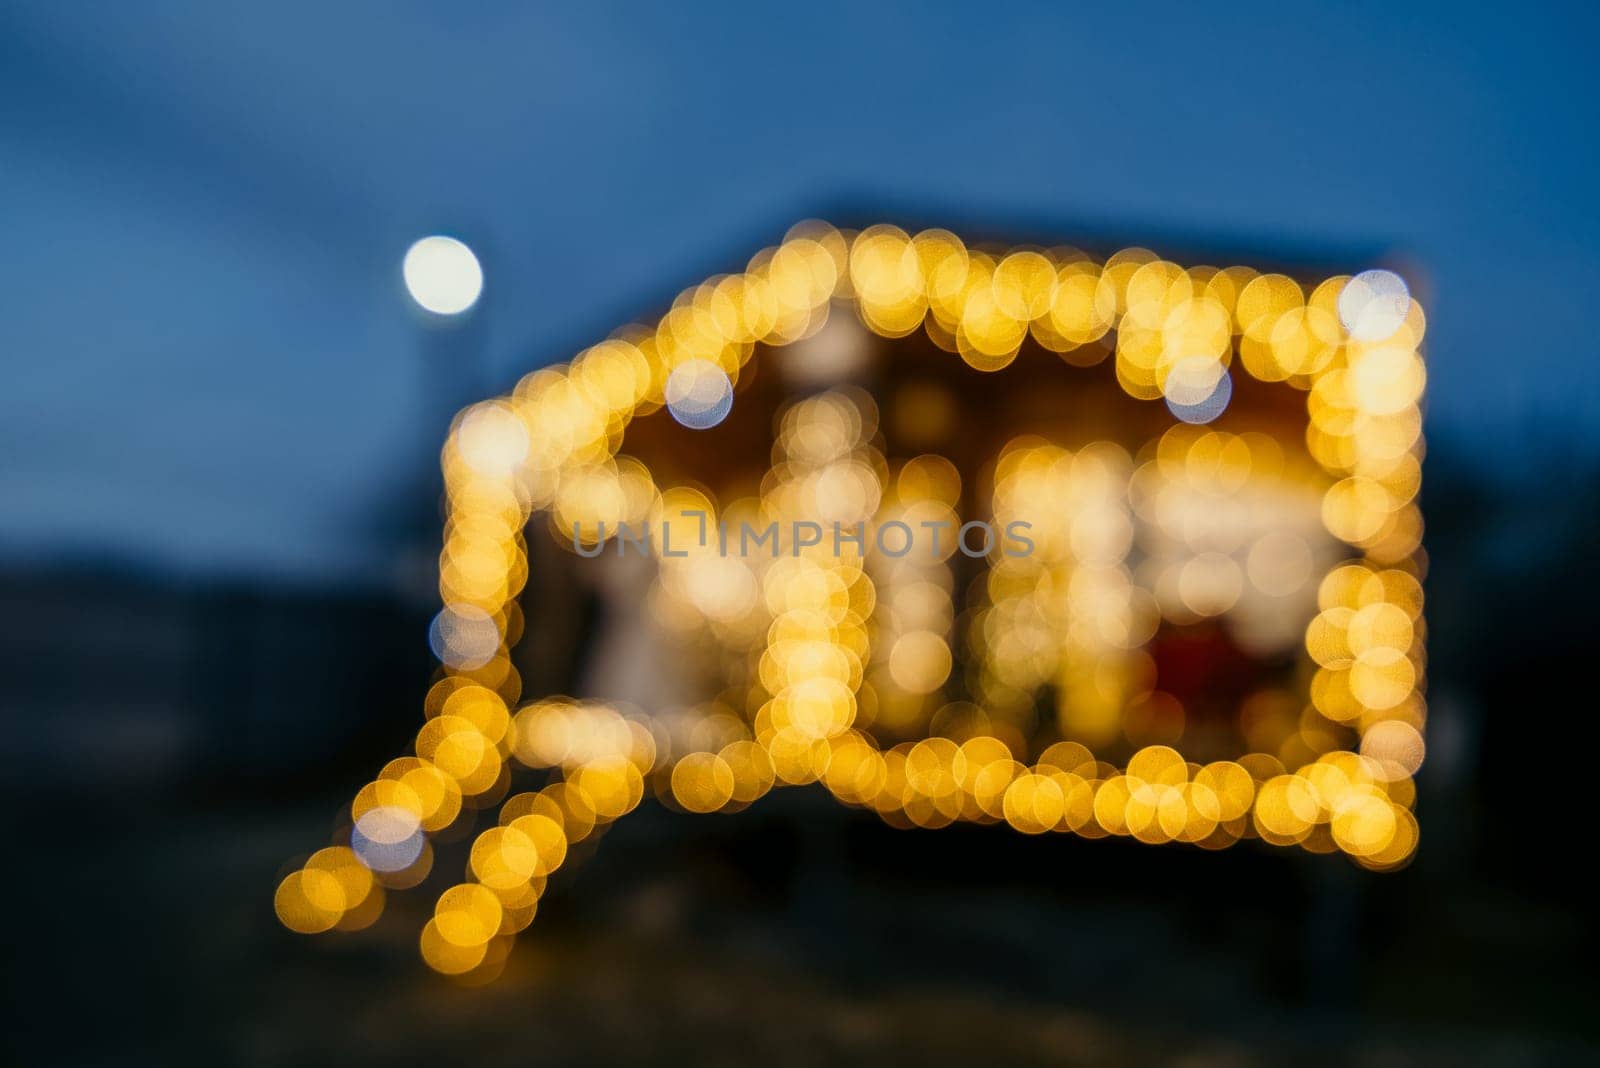 bright Christmas lights on house, creating decorative illumination in evening scene